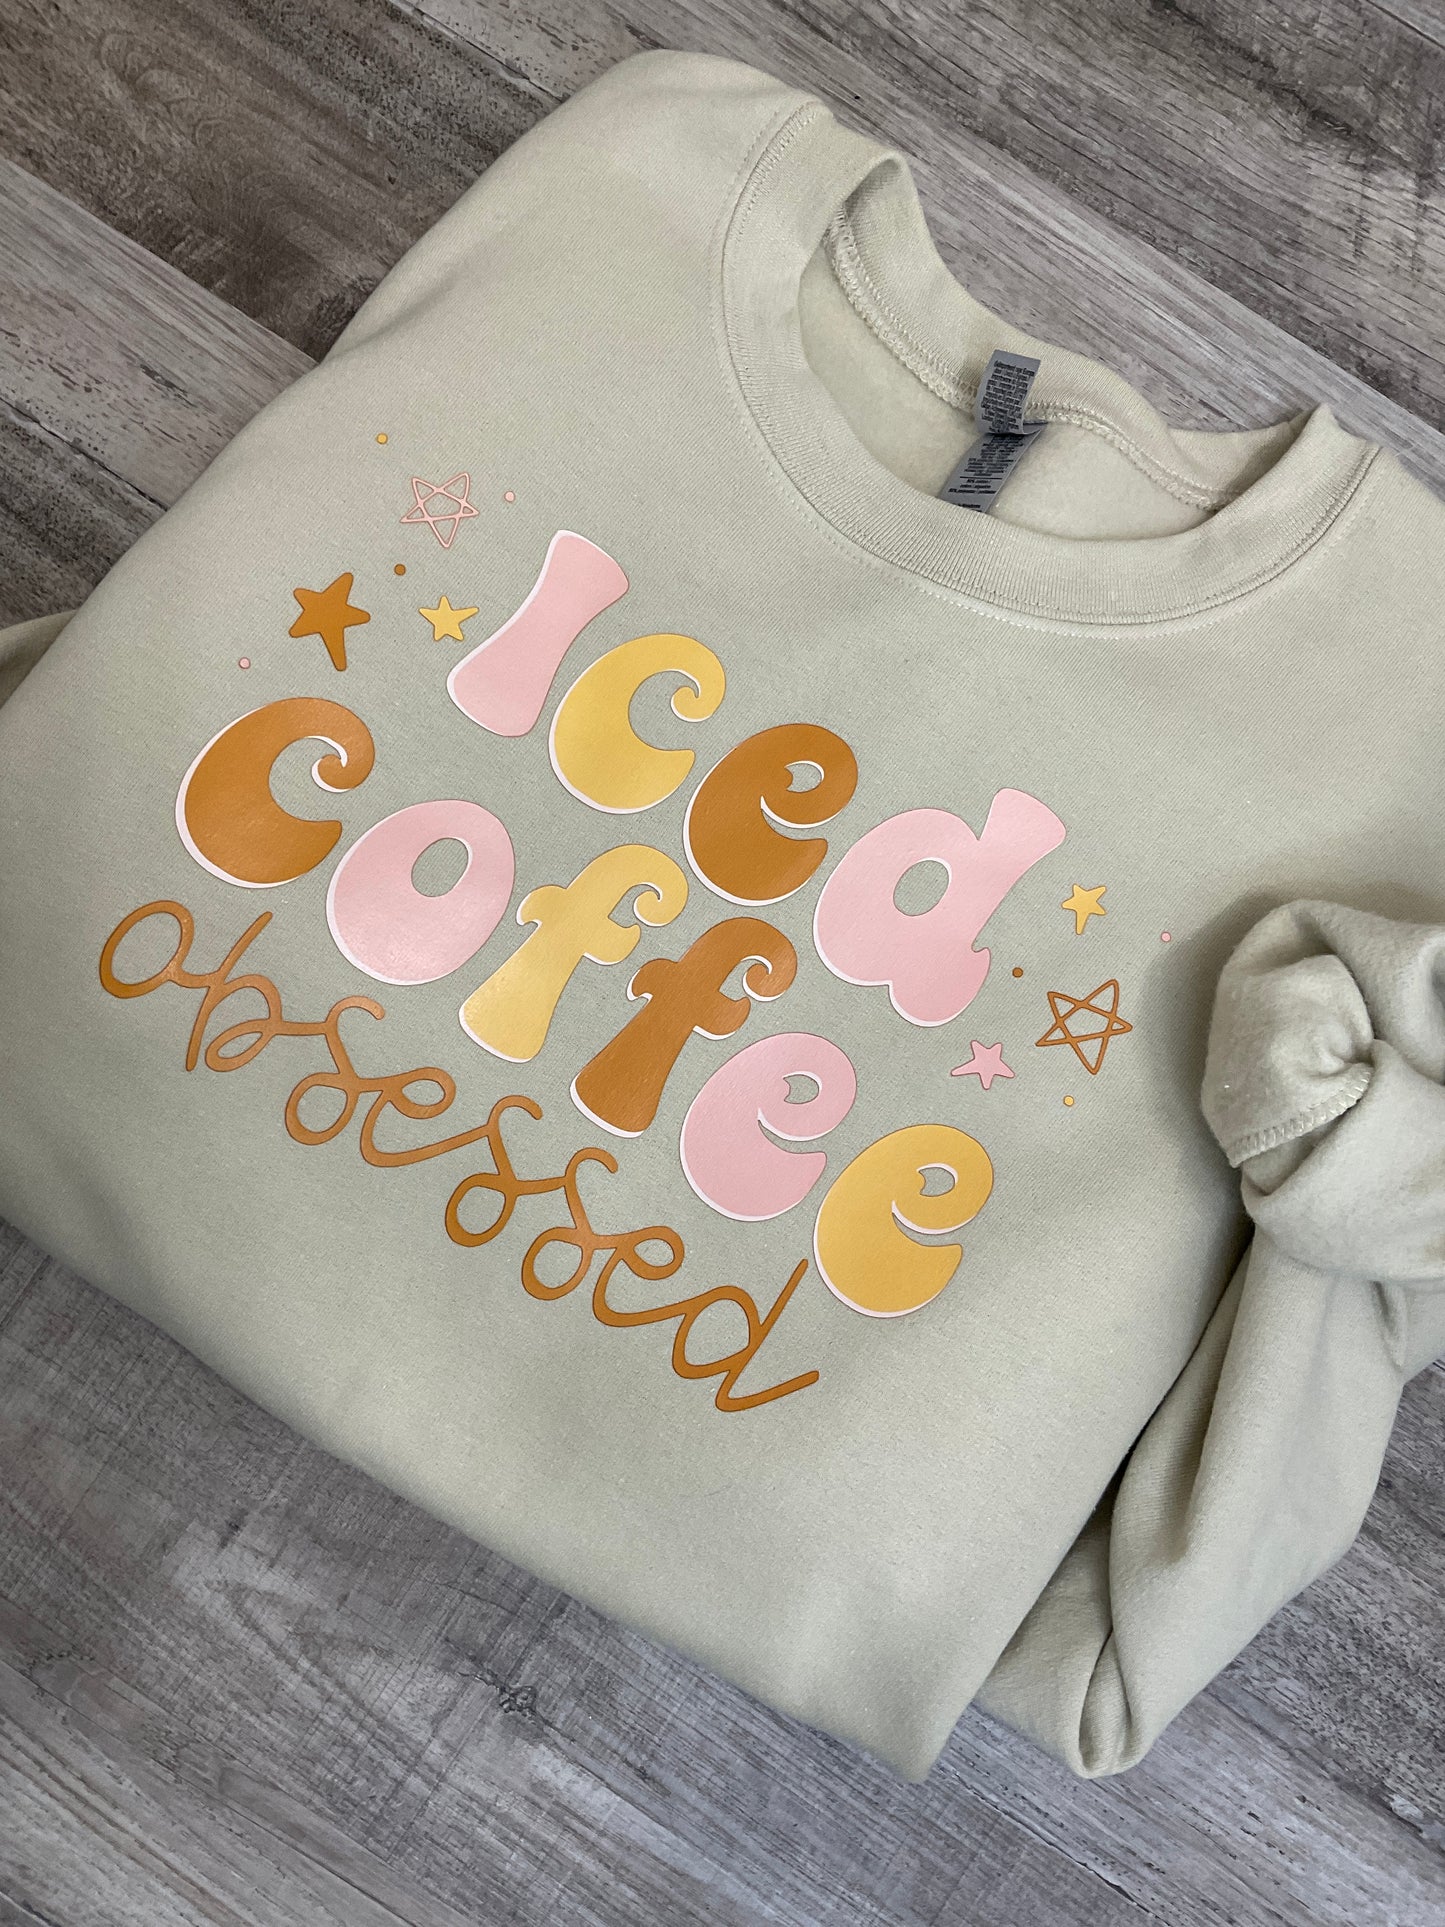 Iced coffee please sweater